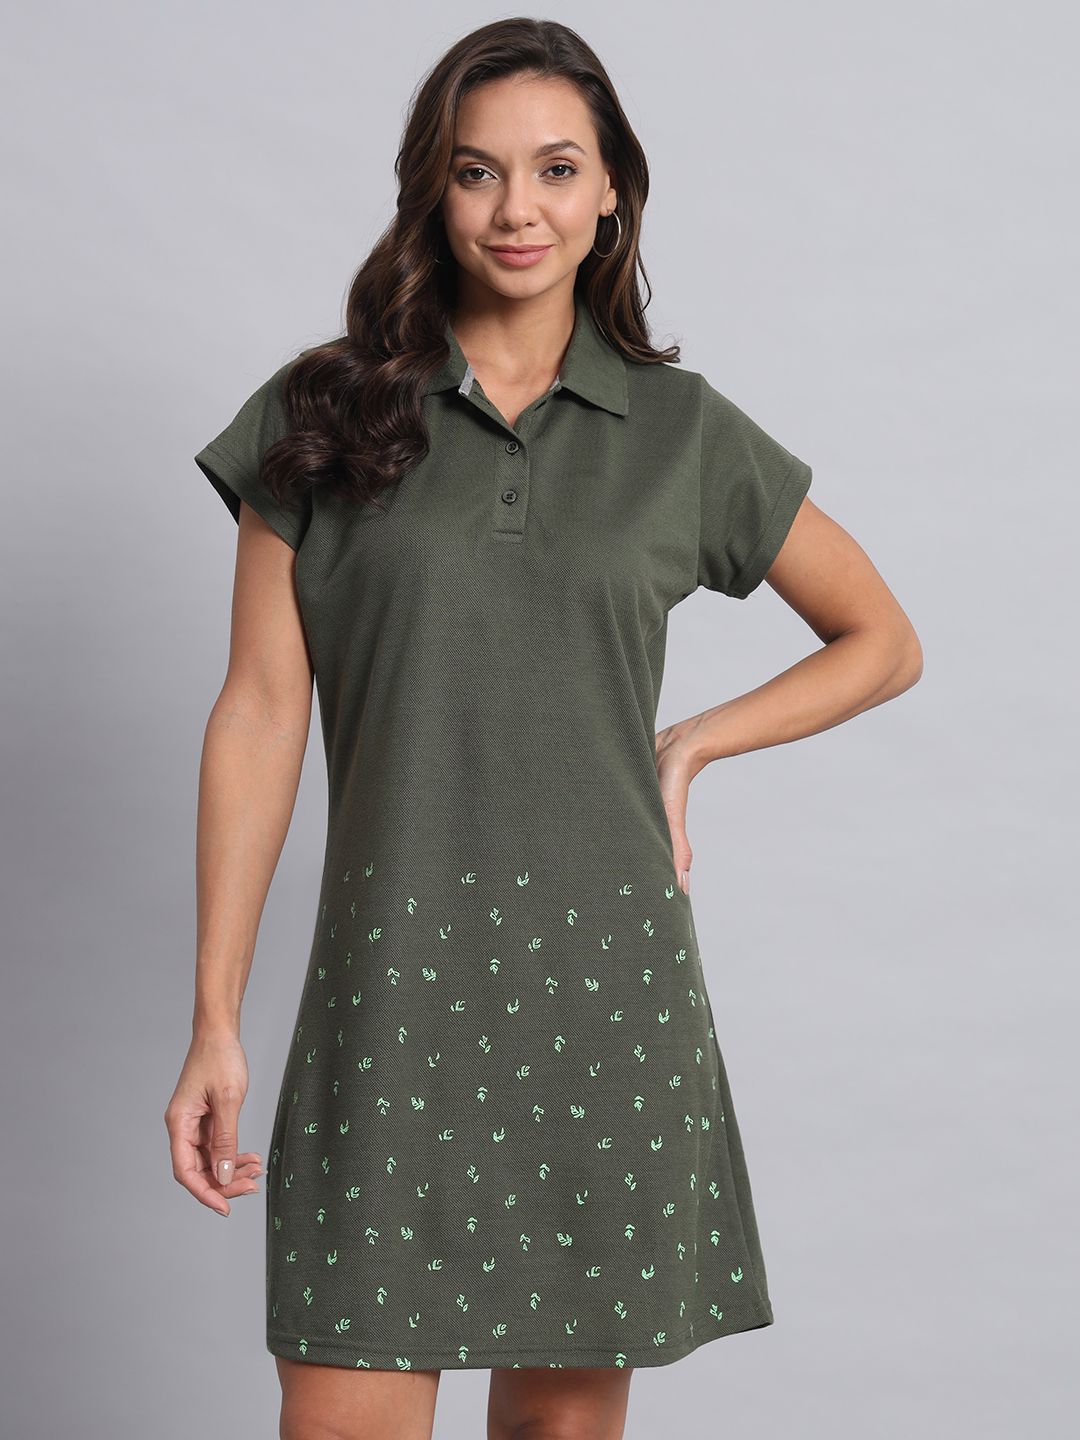     			OBAAN Cotton Blend Printed Above Knee Women's T-shirt Dress - Olive ( Pack of 1 )